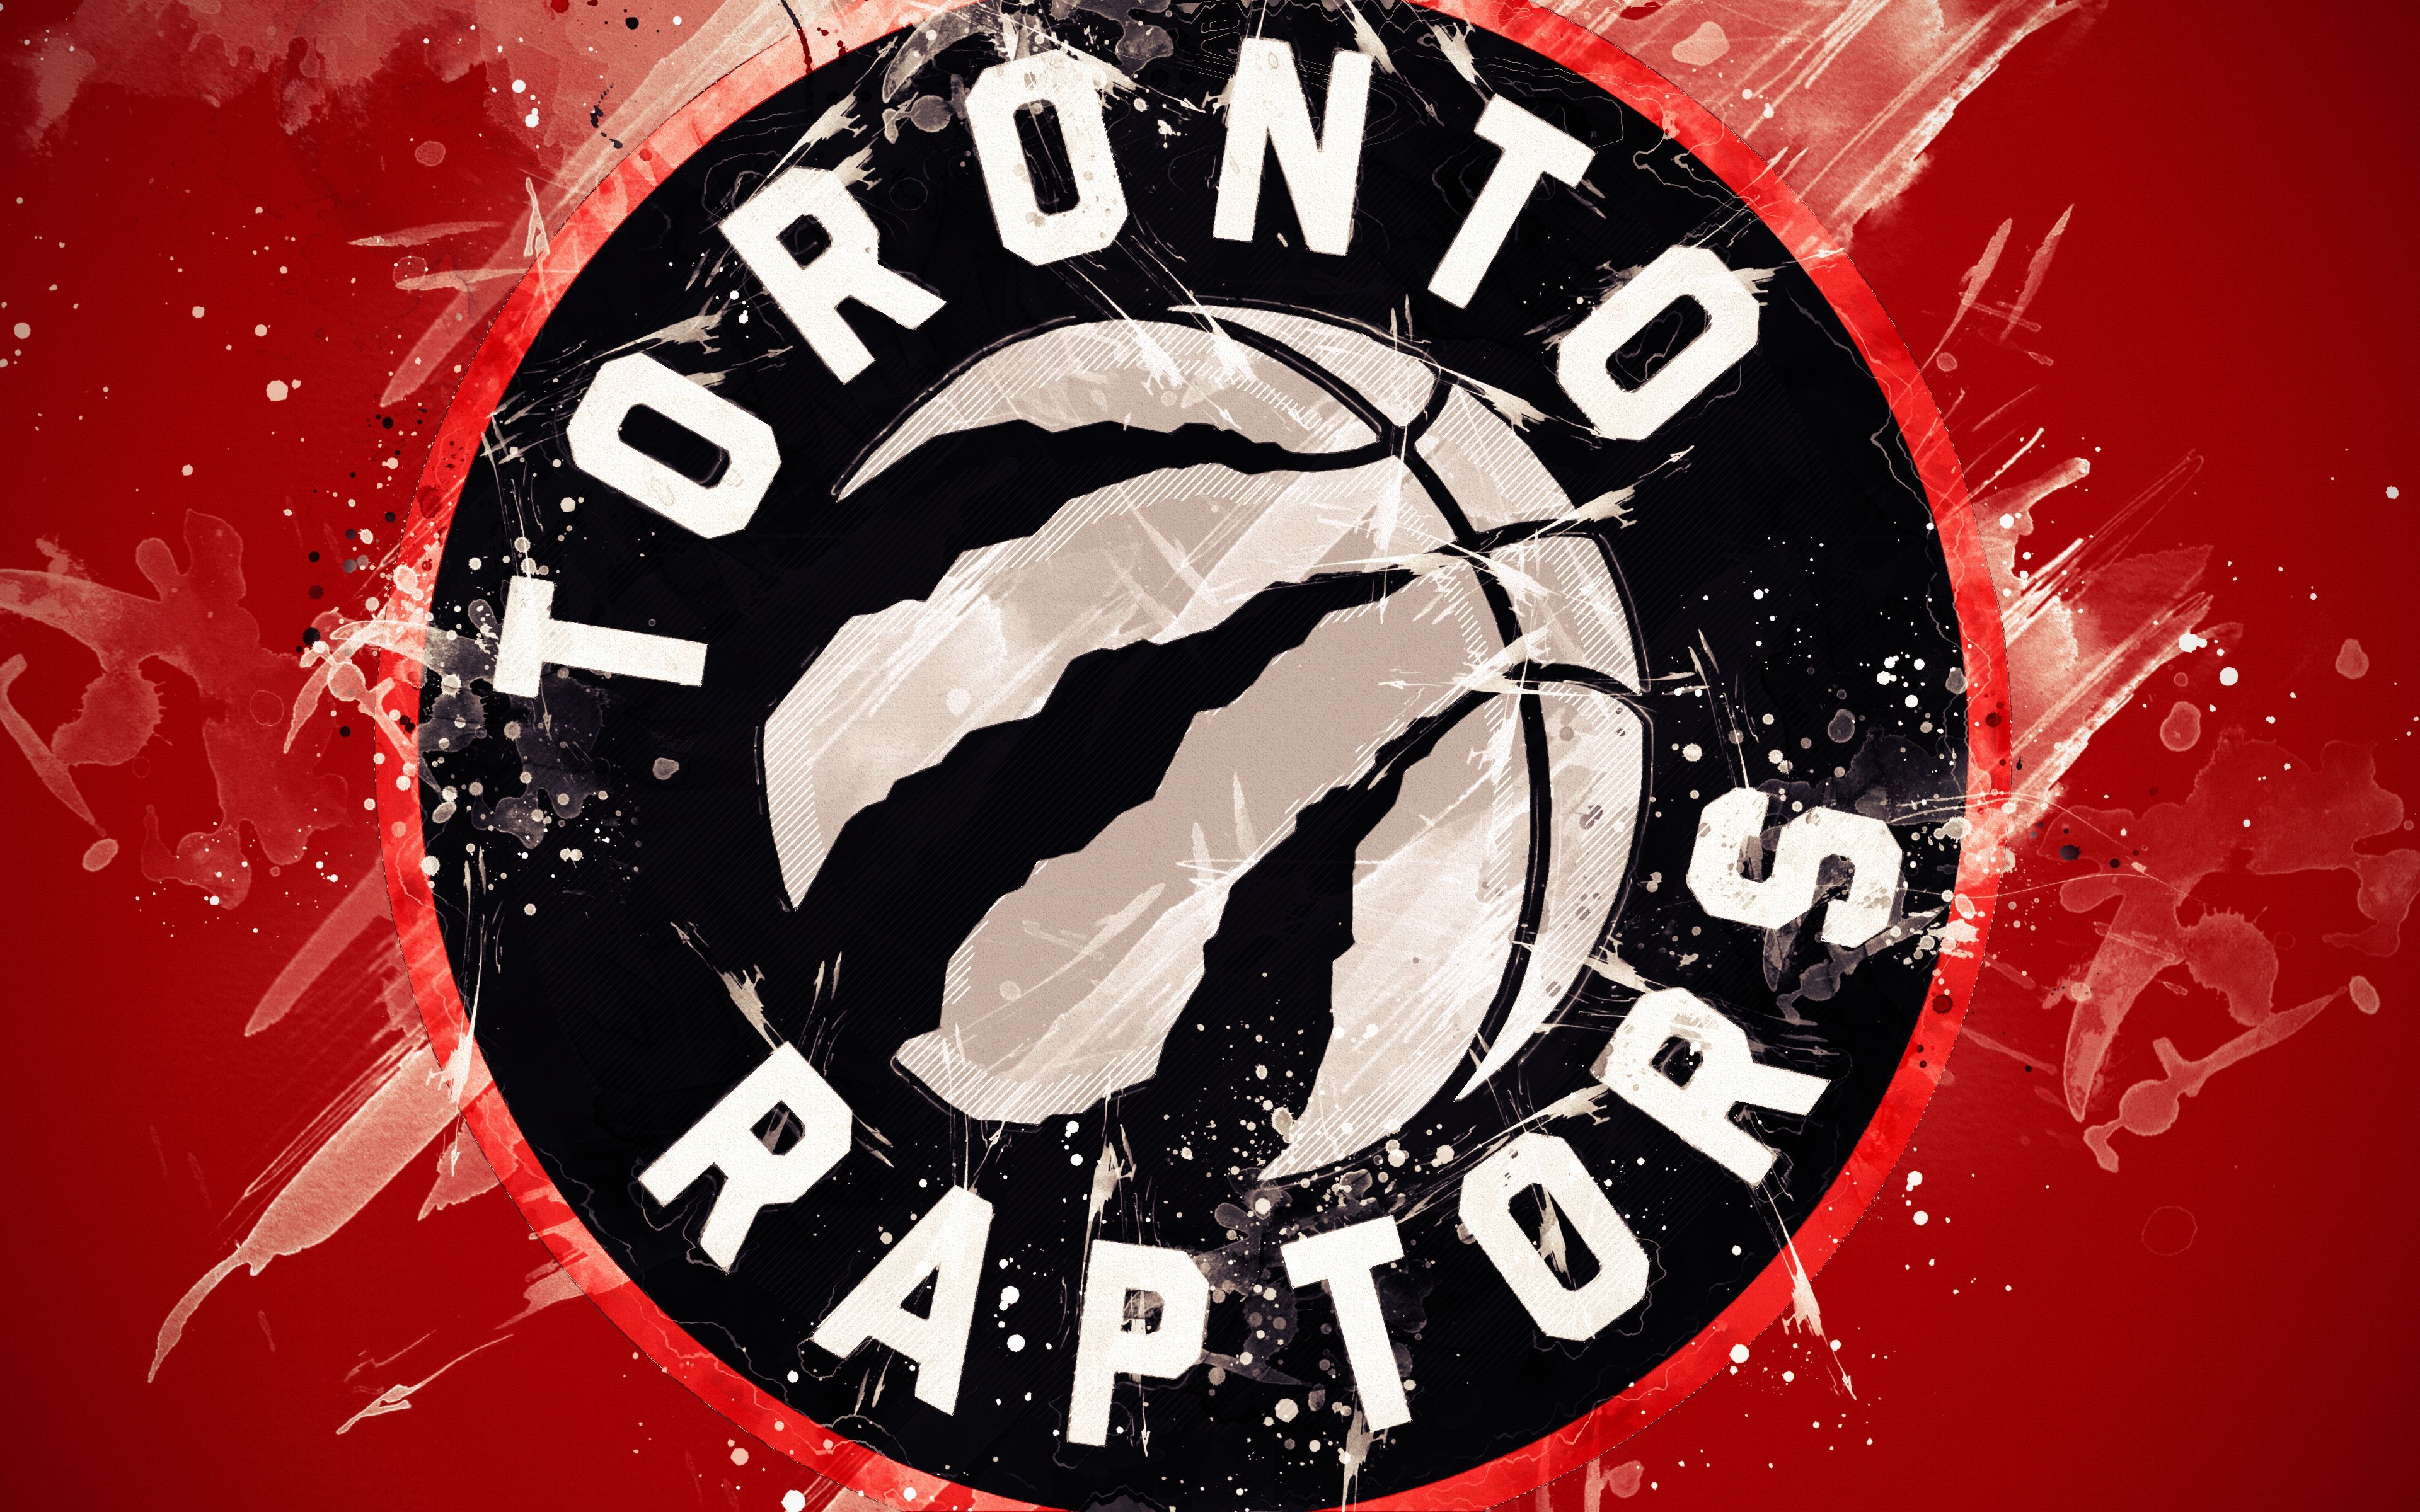 Toronto Raptors Logo Wallpaper Free Toronto Raptors Logo